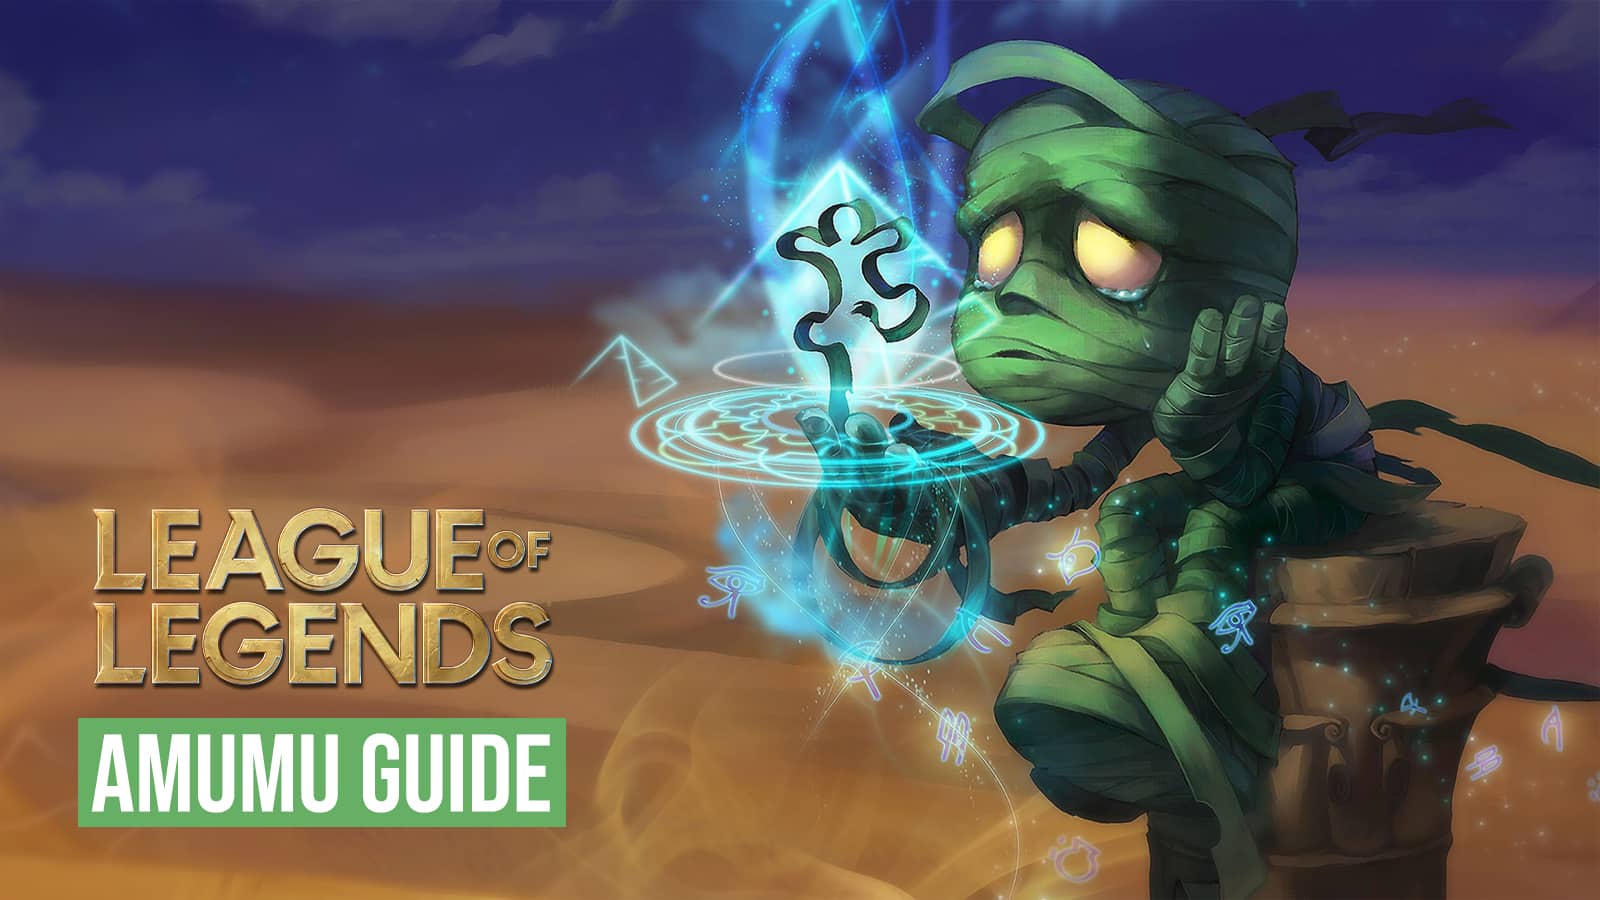 Amumu League of Legends guide best runes builds tips tricks skins